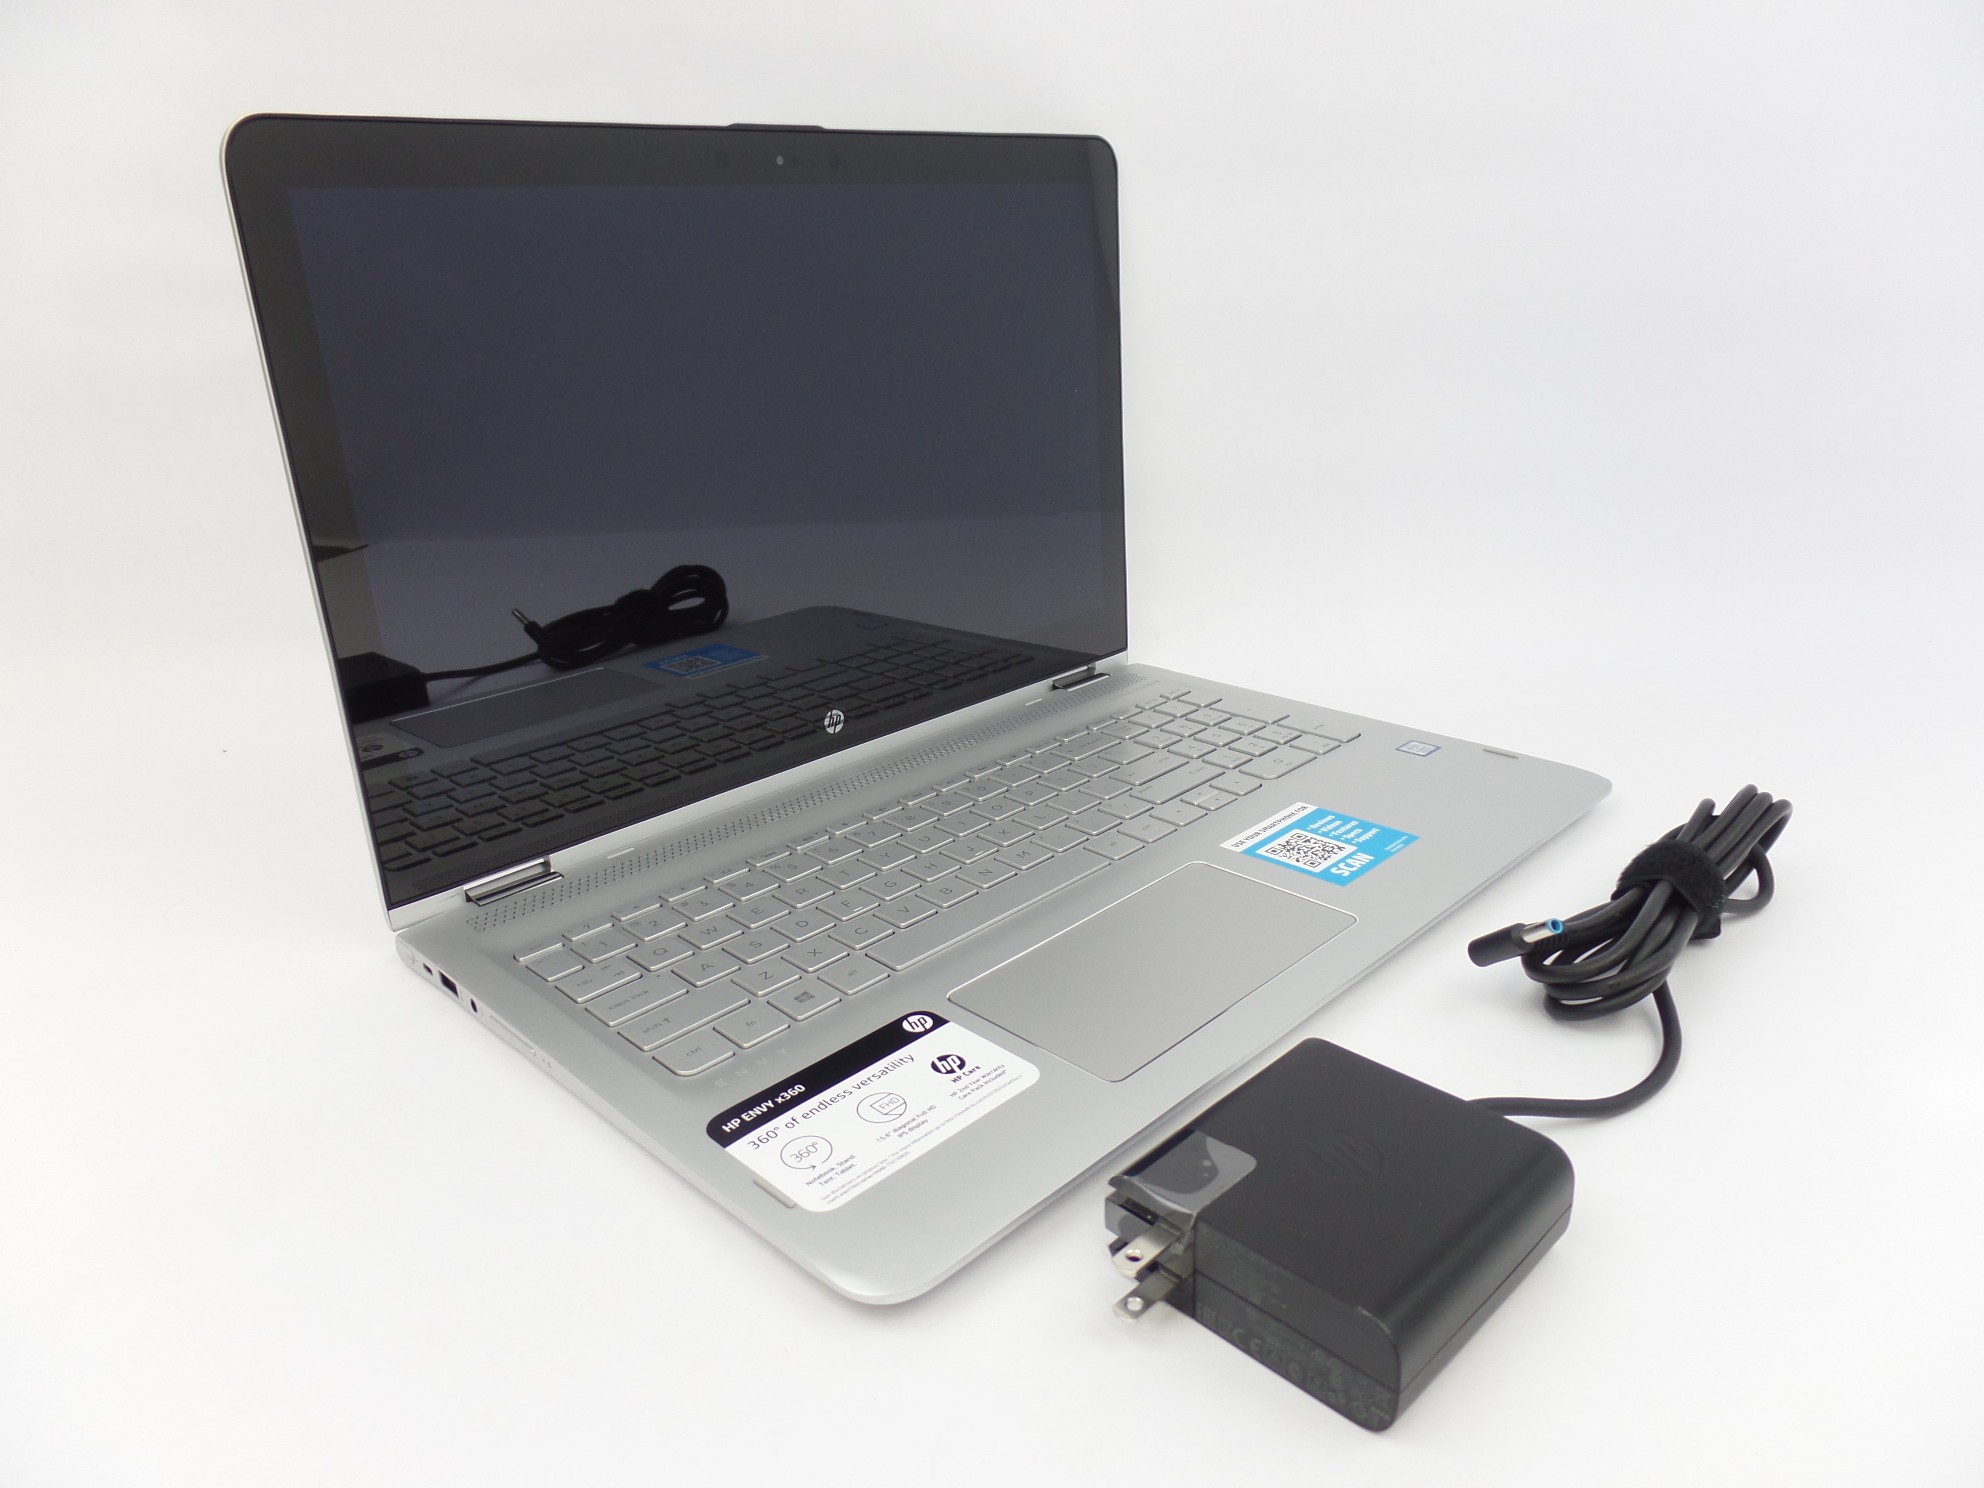 HP ENVY x360 15-aq267cl 15.6" FHD Touch i7-8550U 1.8GHz 12GB 1TB HDD W10H Laptop